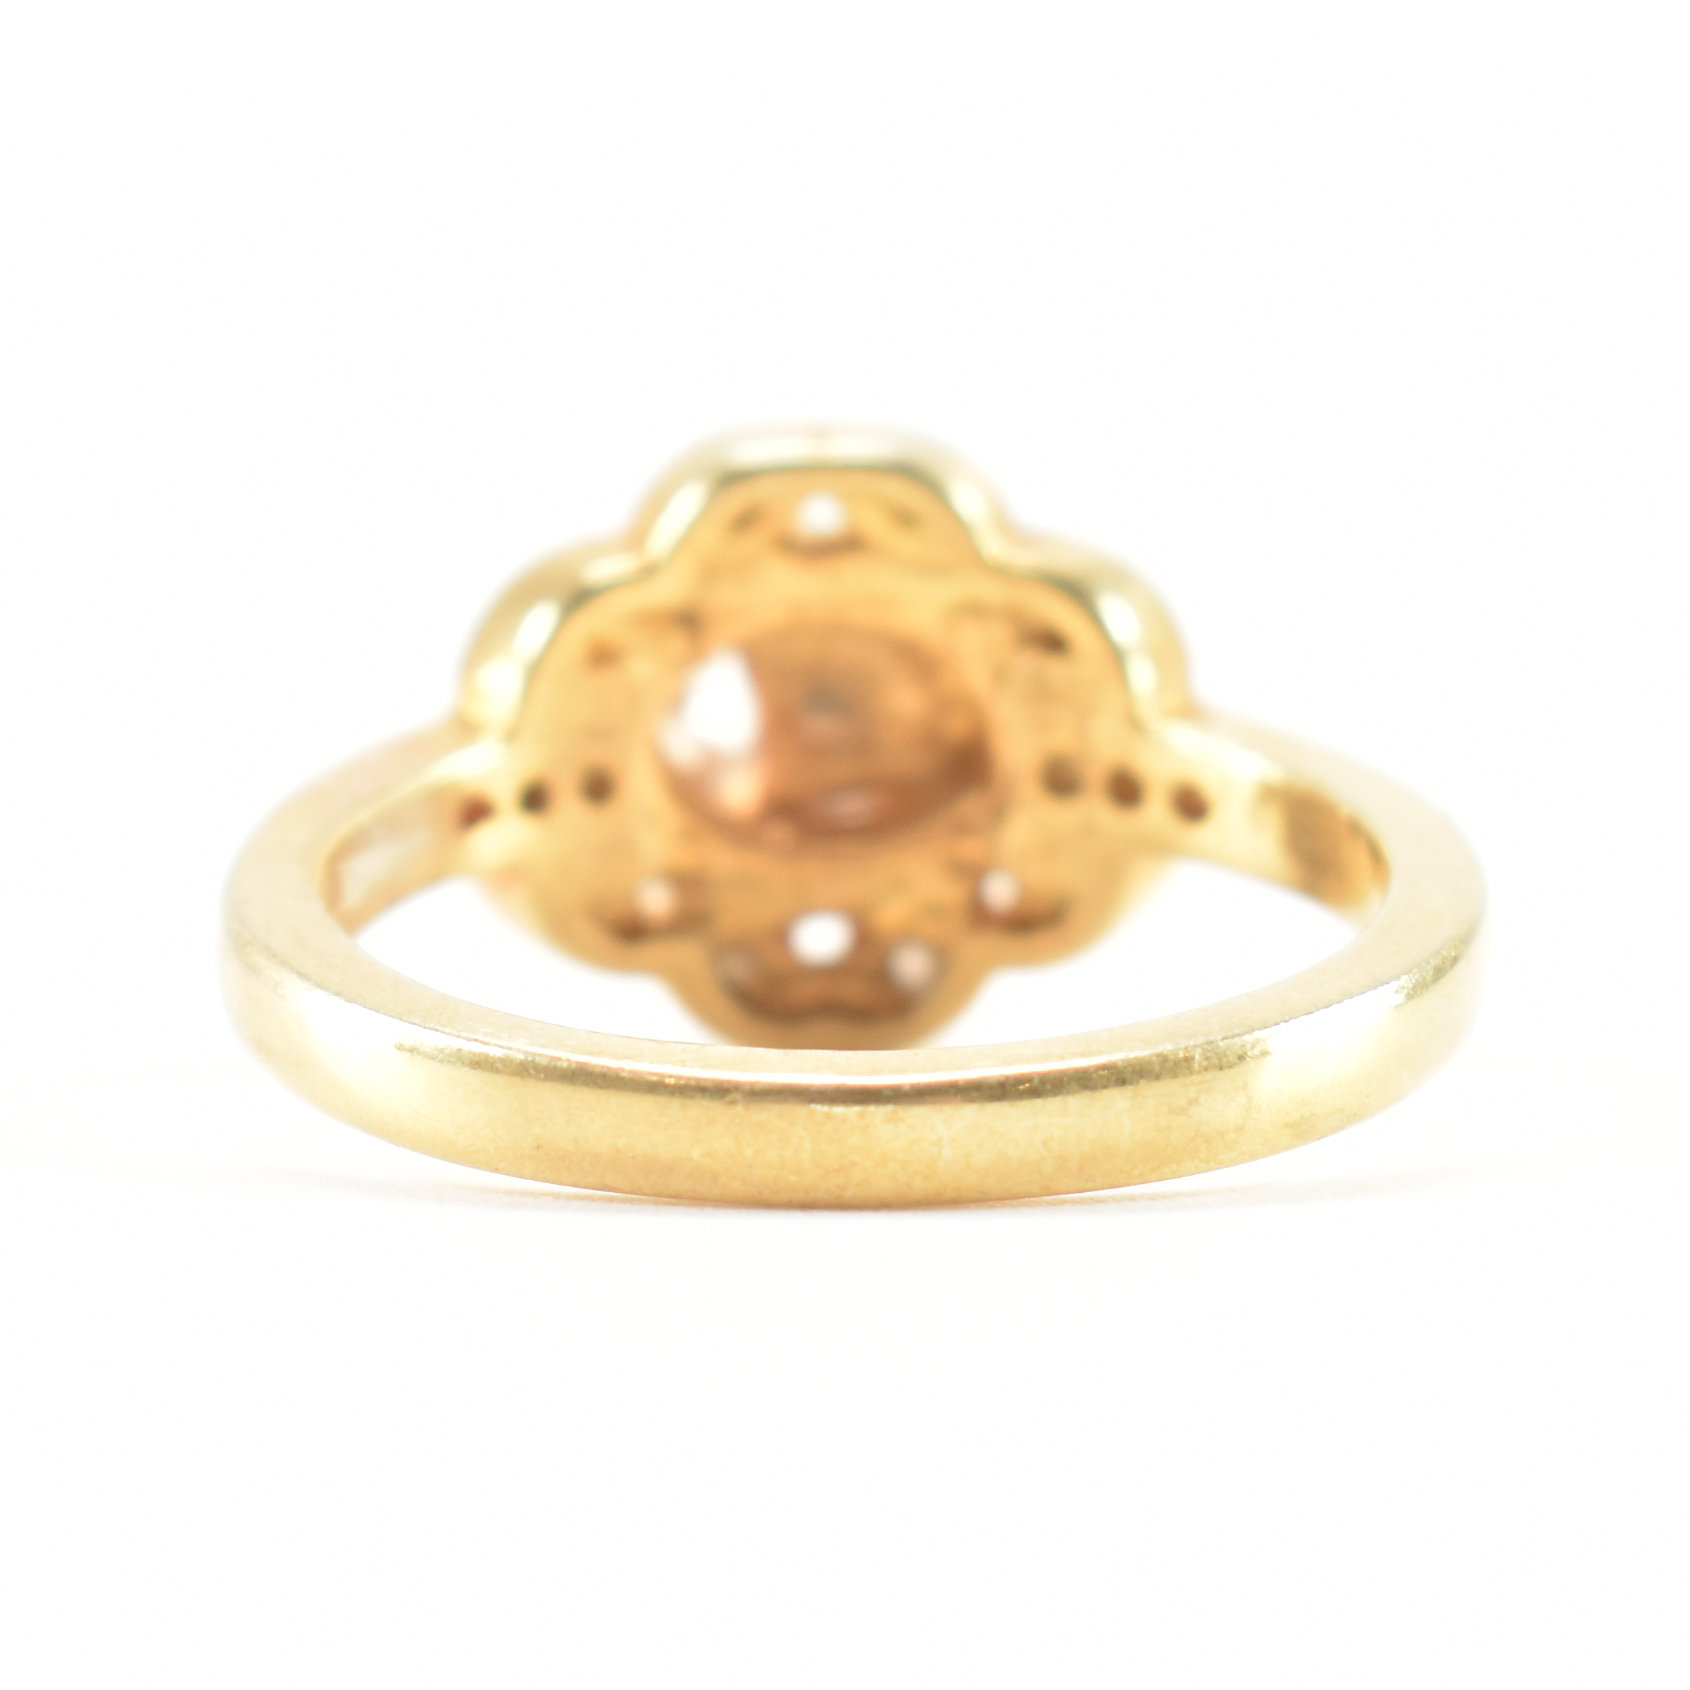 VINTAGE GOLD & ROUGH DIAMOND RING - Image 3 of 7